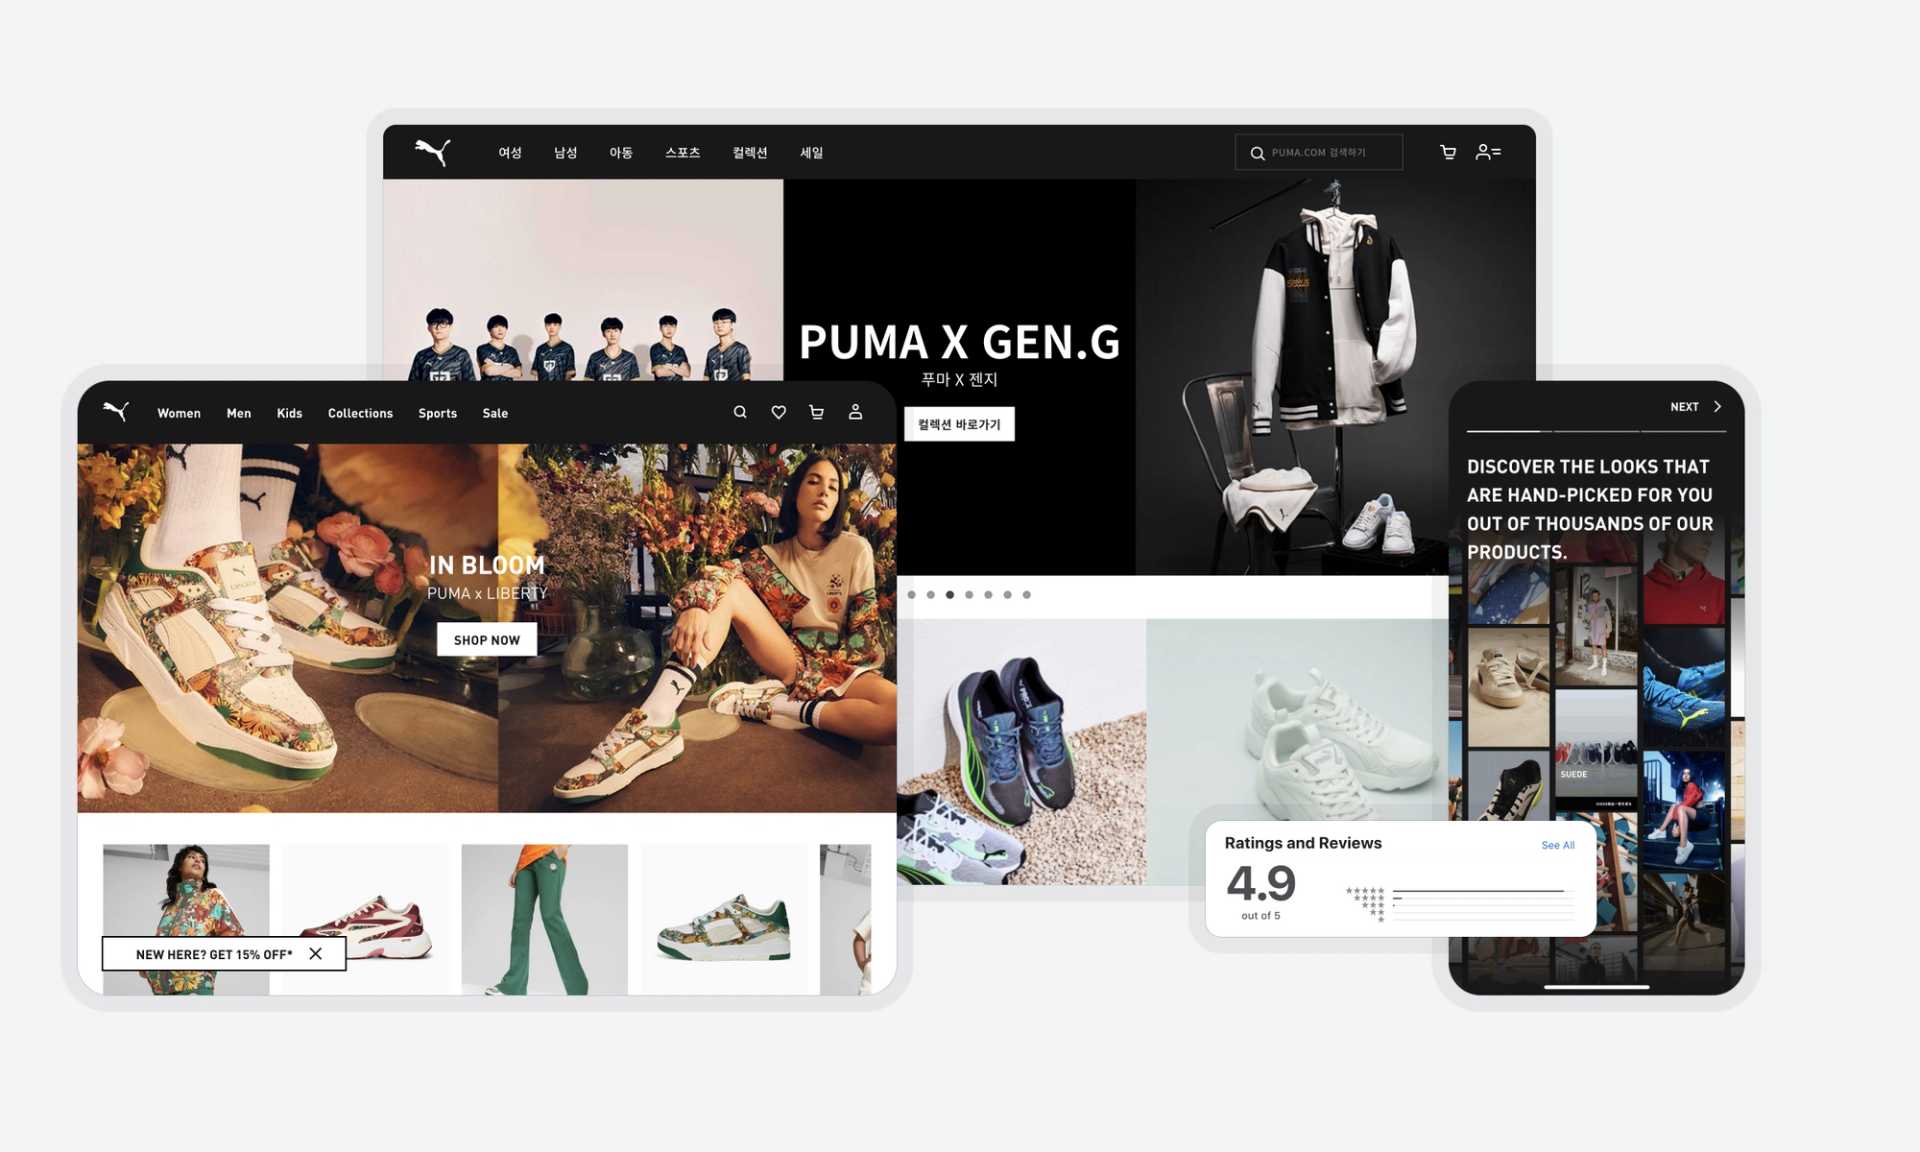 Examples of PUMA web content